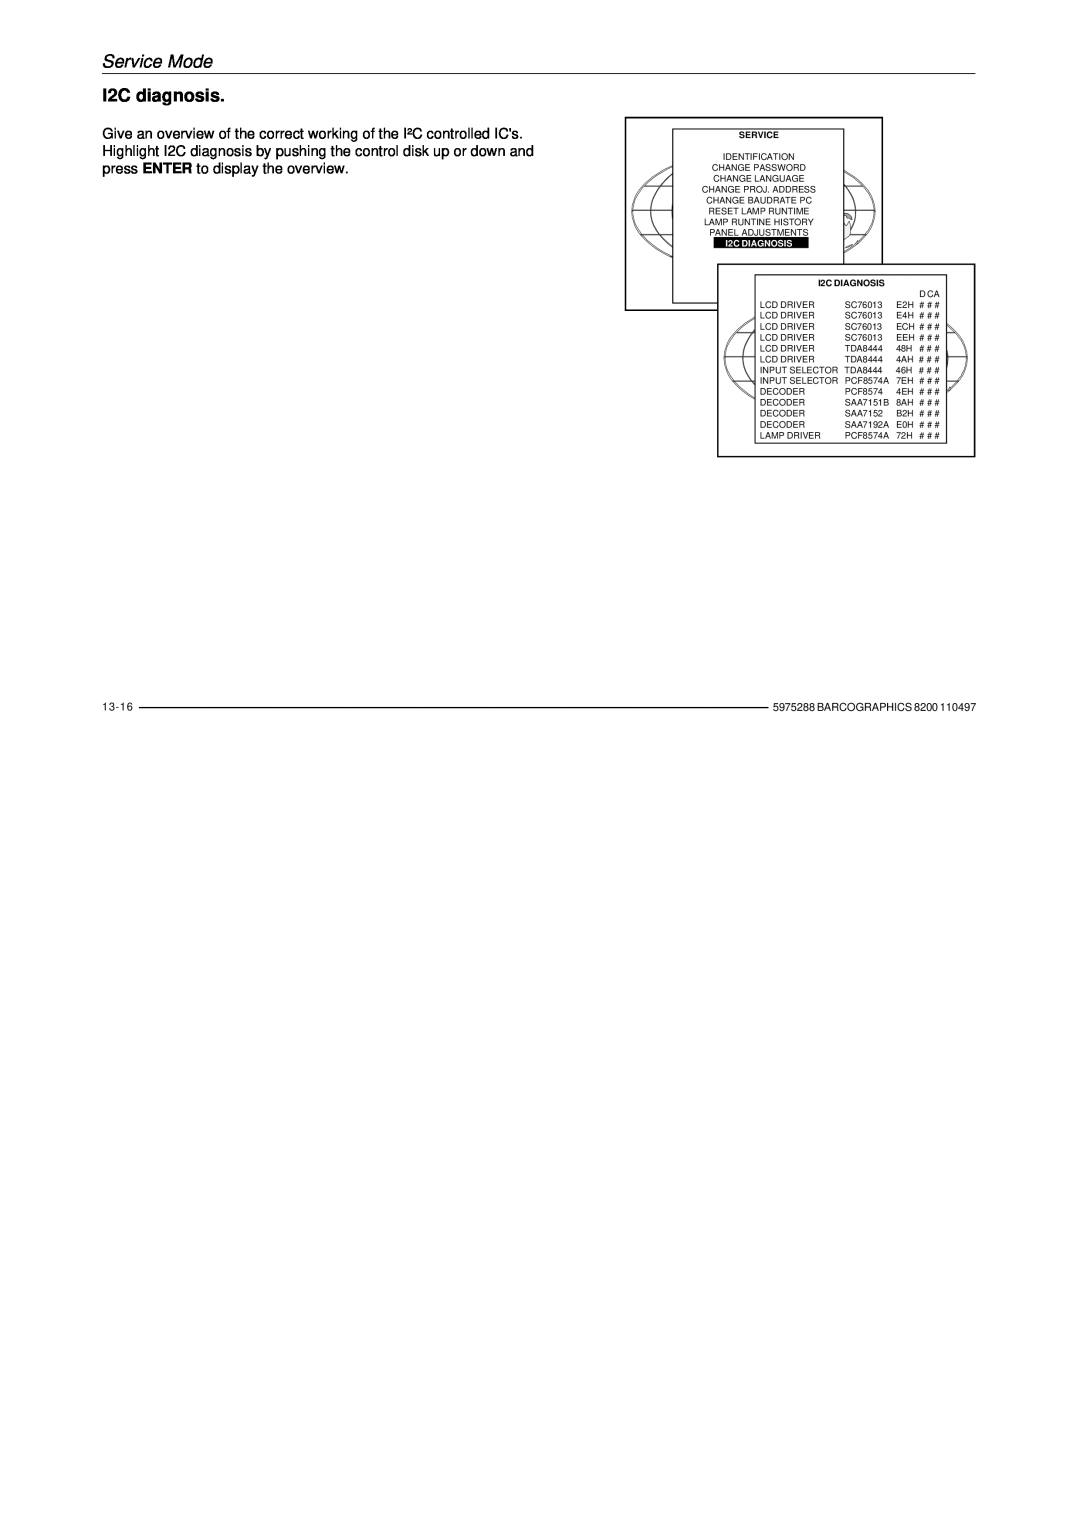 Barco R9001330 owner manual I2C diagnosis, Service Mode, I2C DIAGNOSIS 